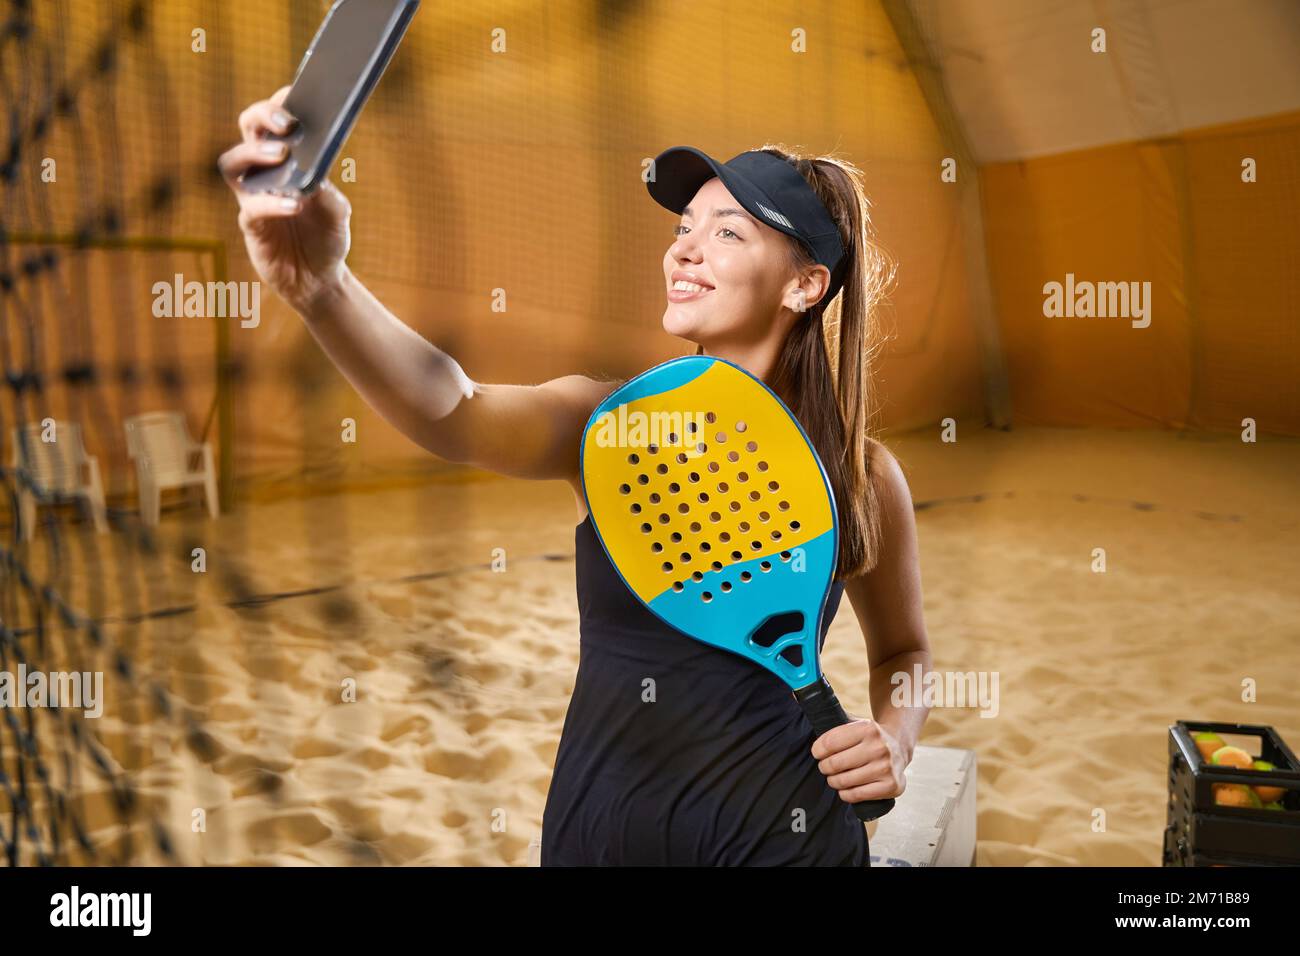 Donna prende selfie in uniforme sportiva e racchetta in mano Foto Stock